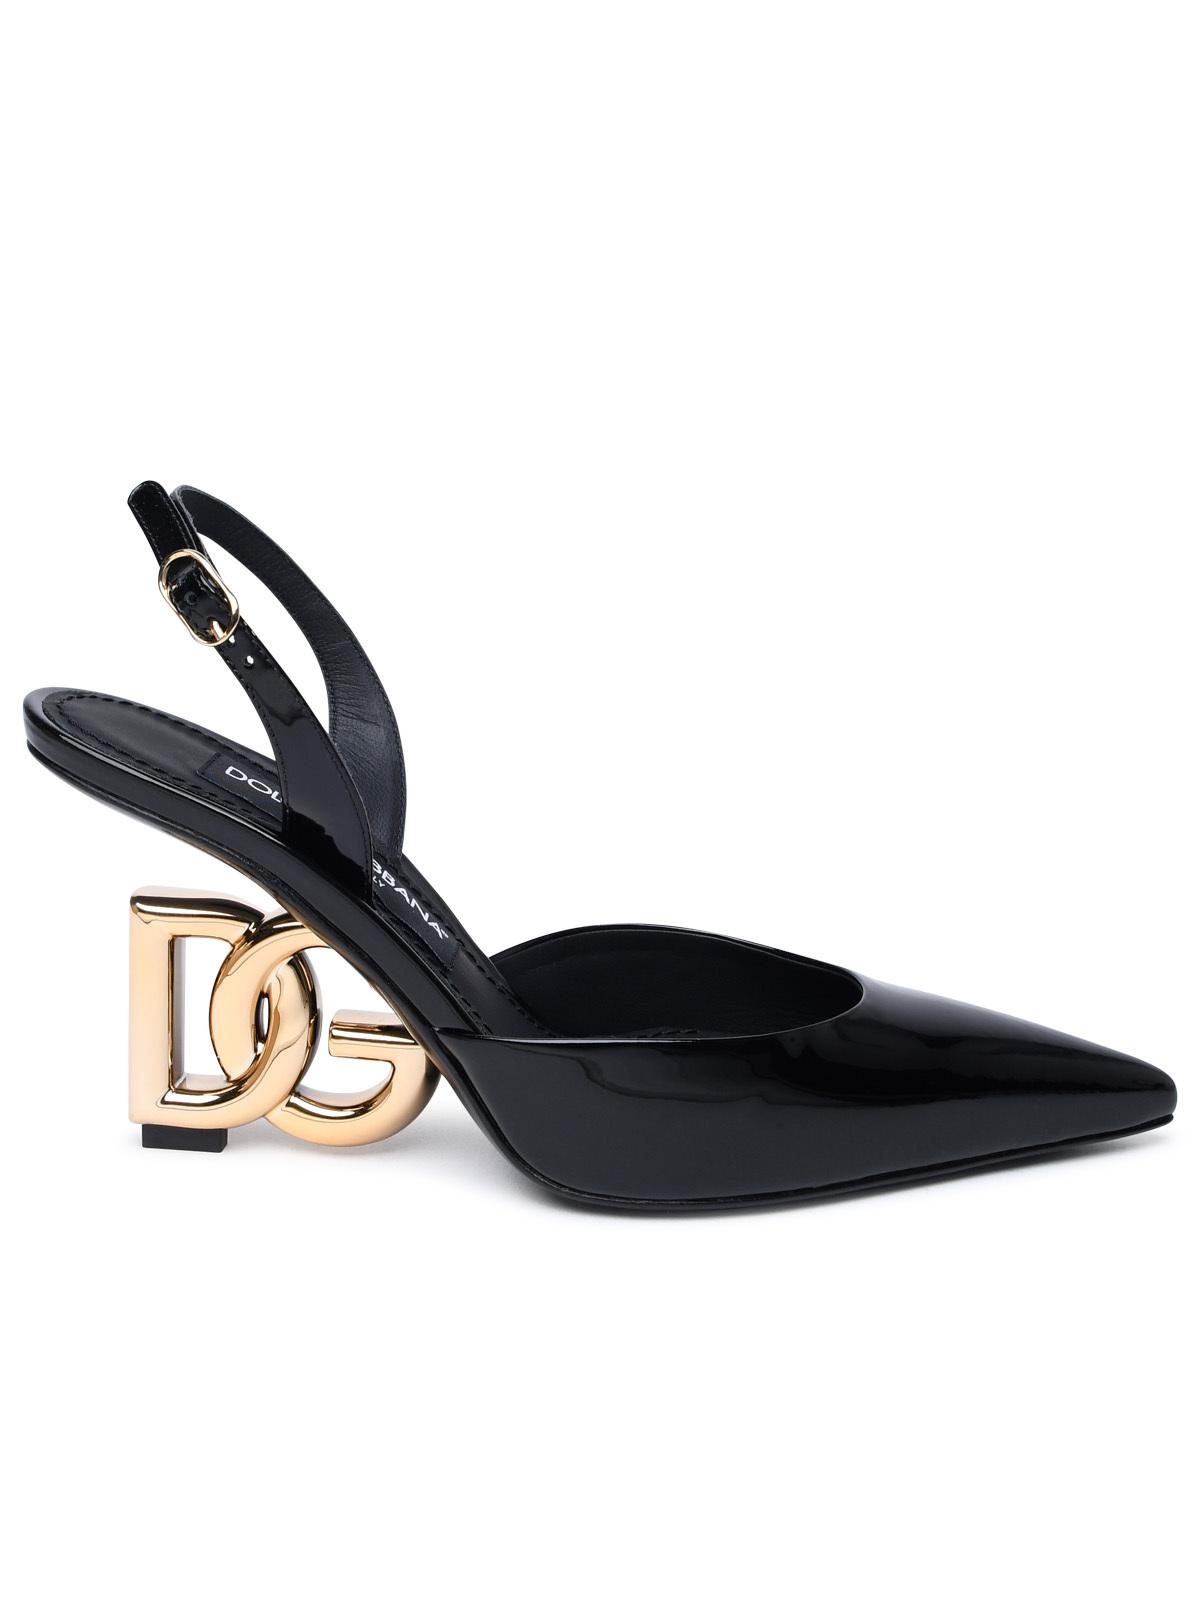 Dolce & Gabbana Black Patent Leather Pumps Woman - 1